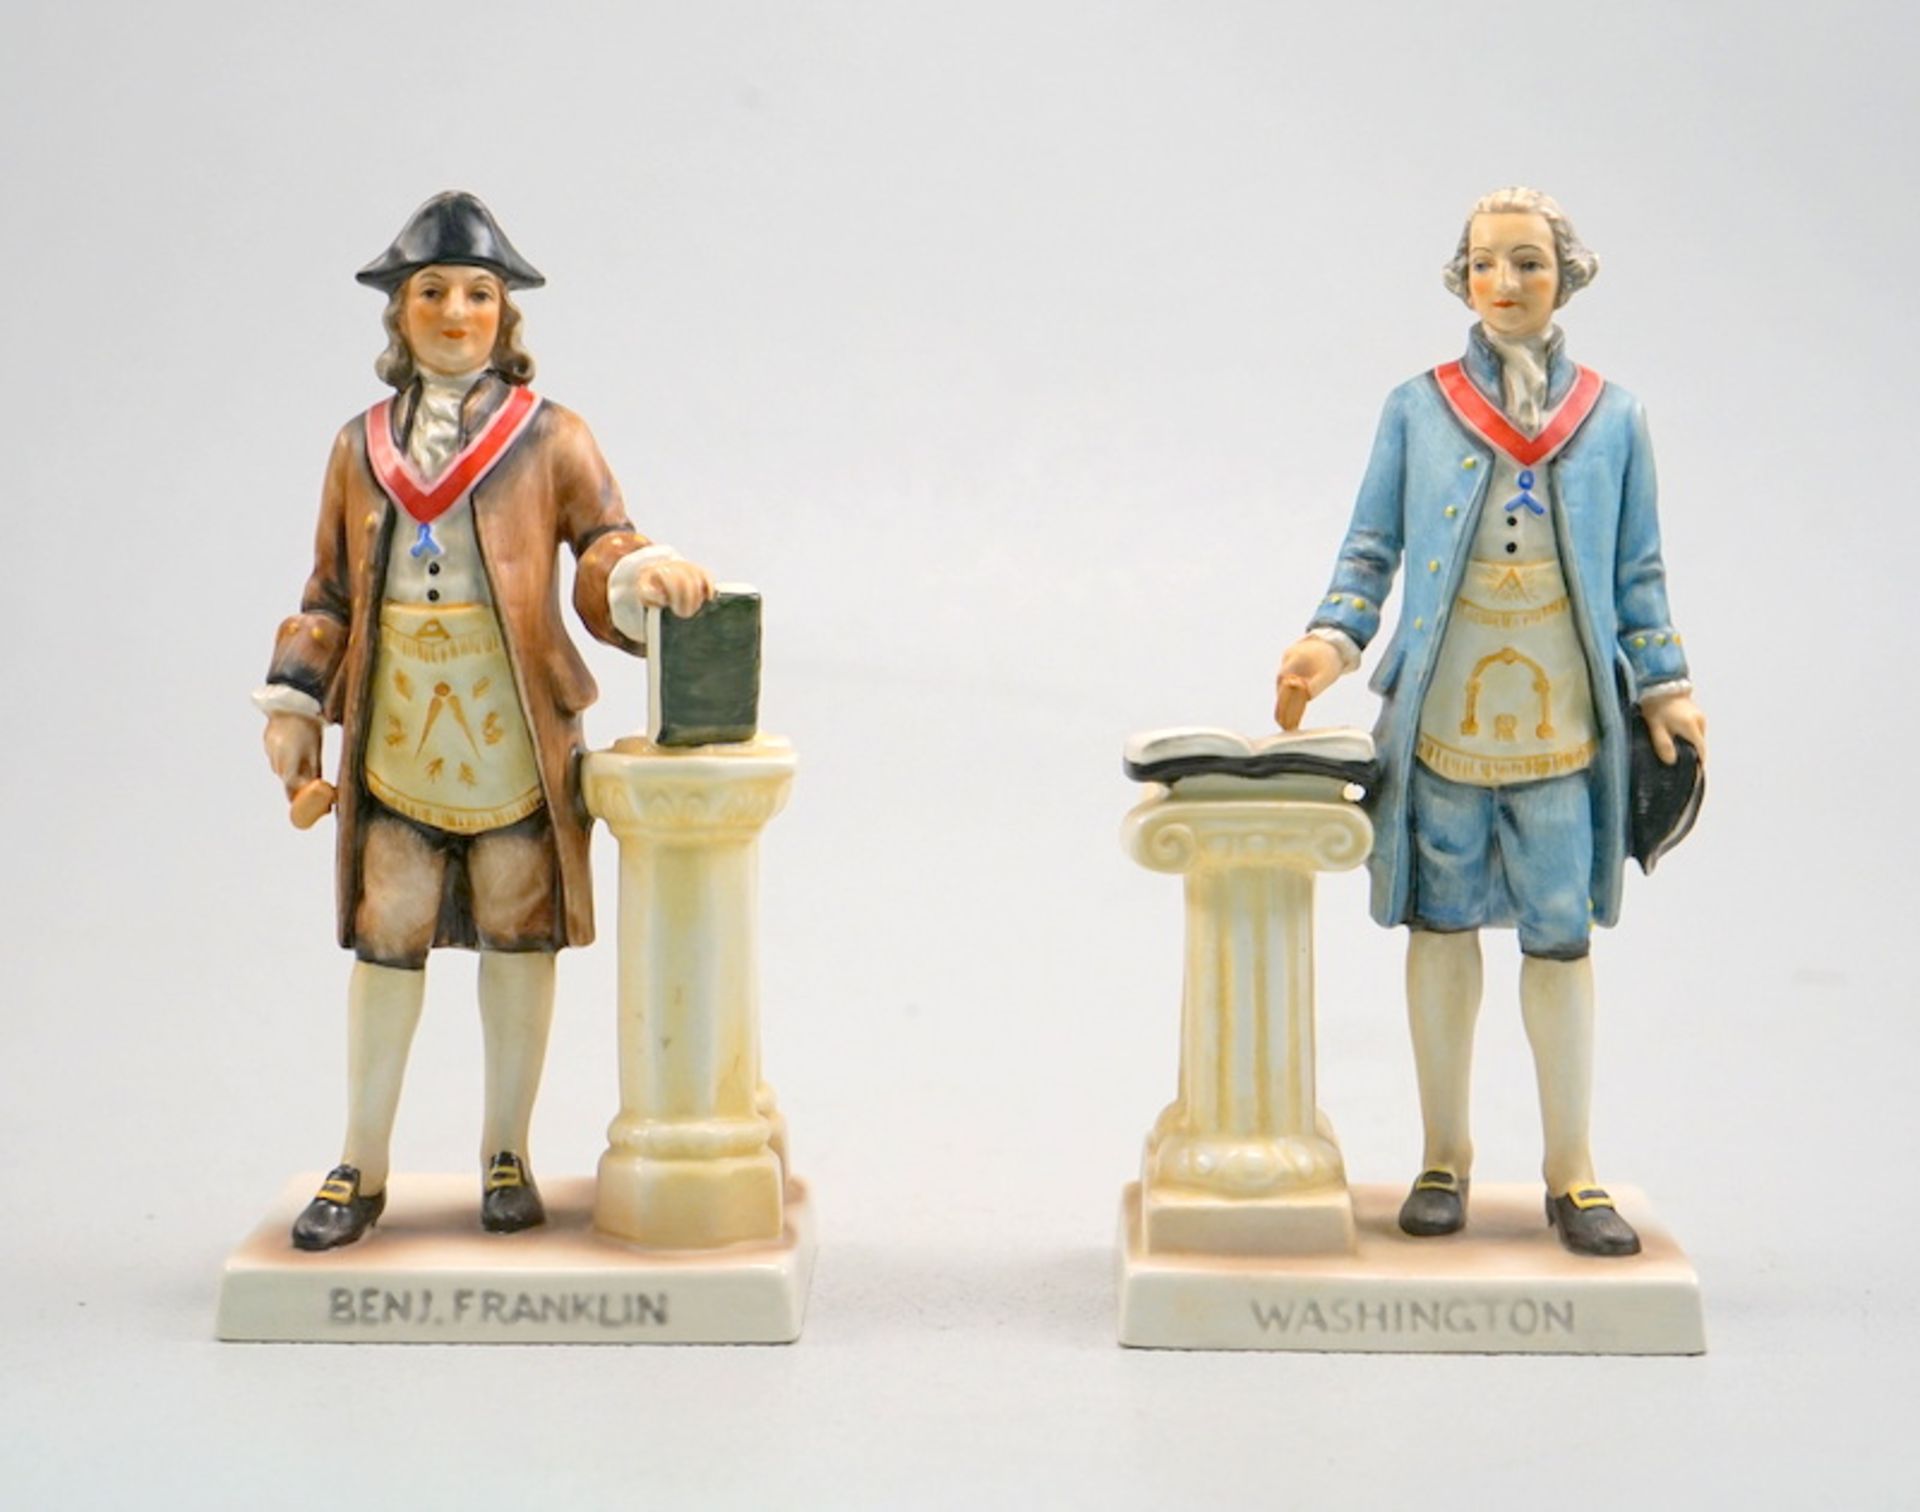 Goebel Porzellanfabrik (Aufglasurblaue Marke, 50er Jahre): Zwei Freimaurer Figuren Benj. Franklin